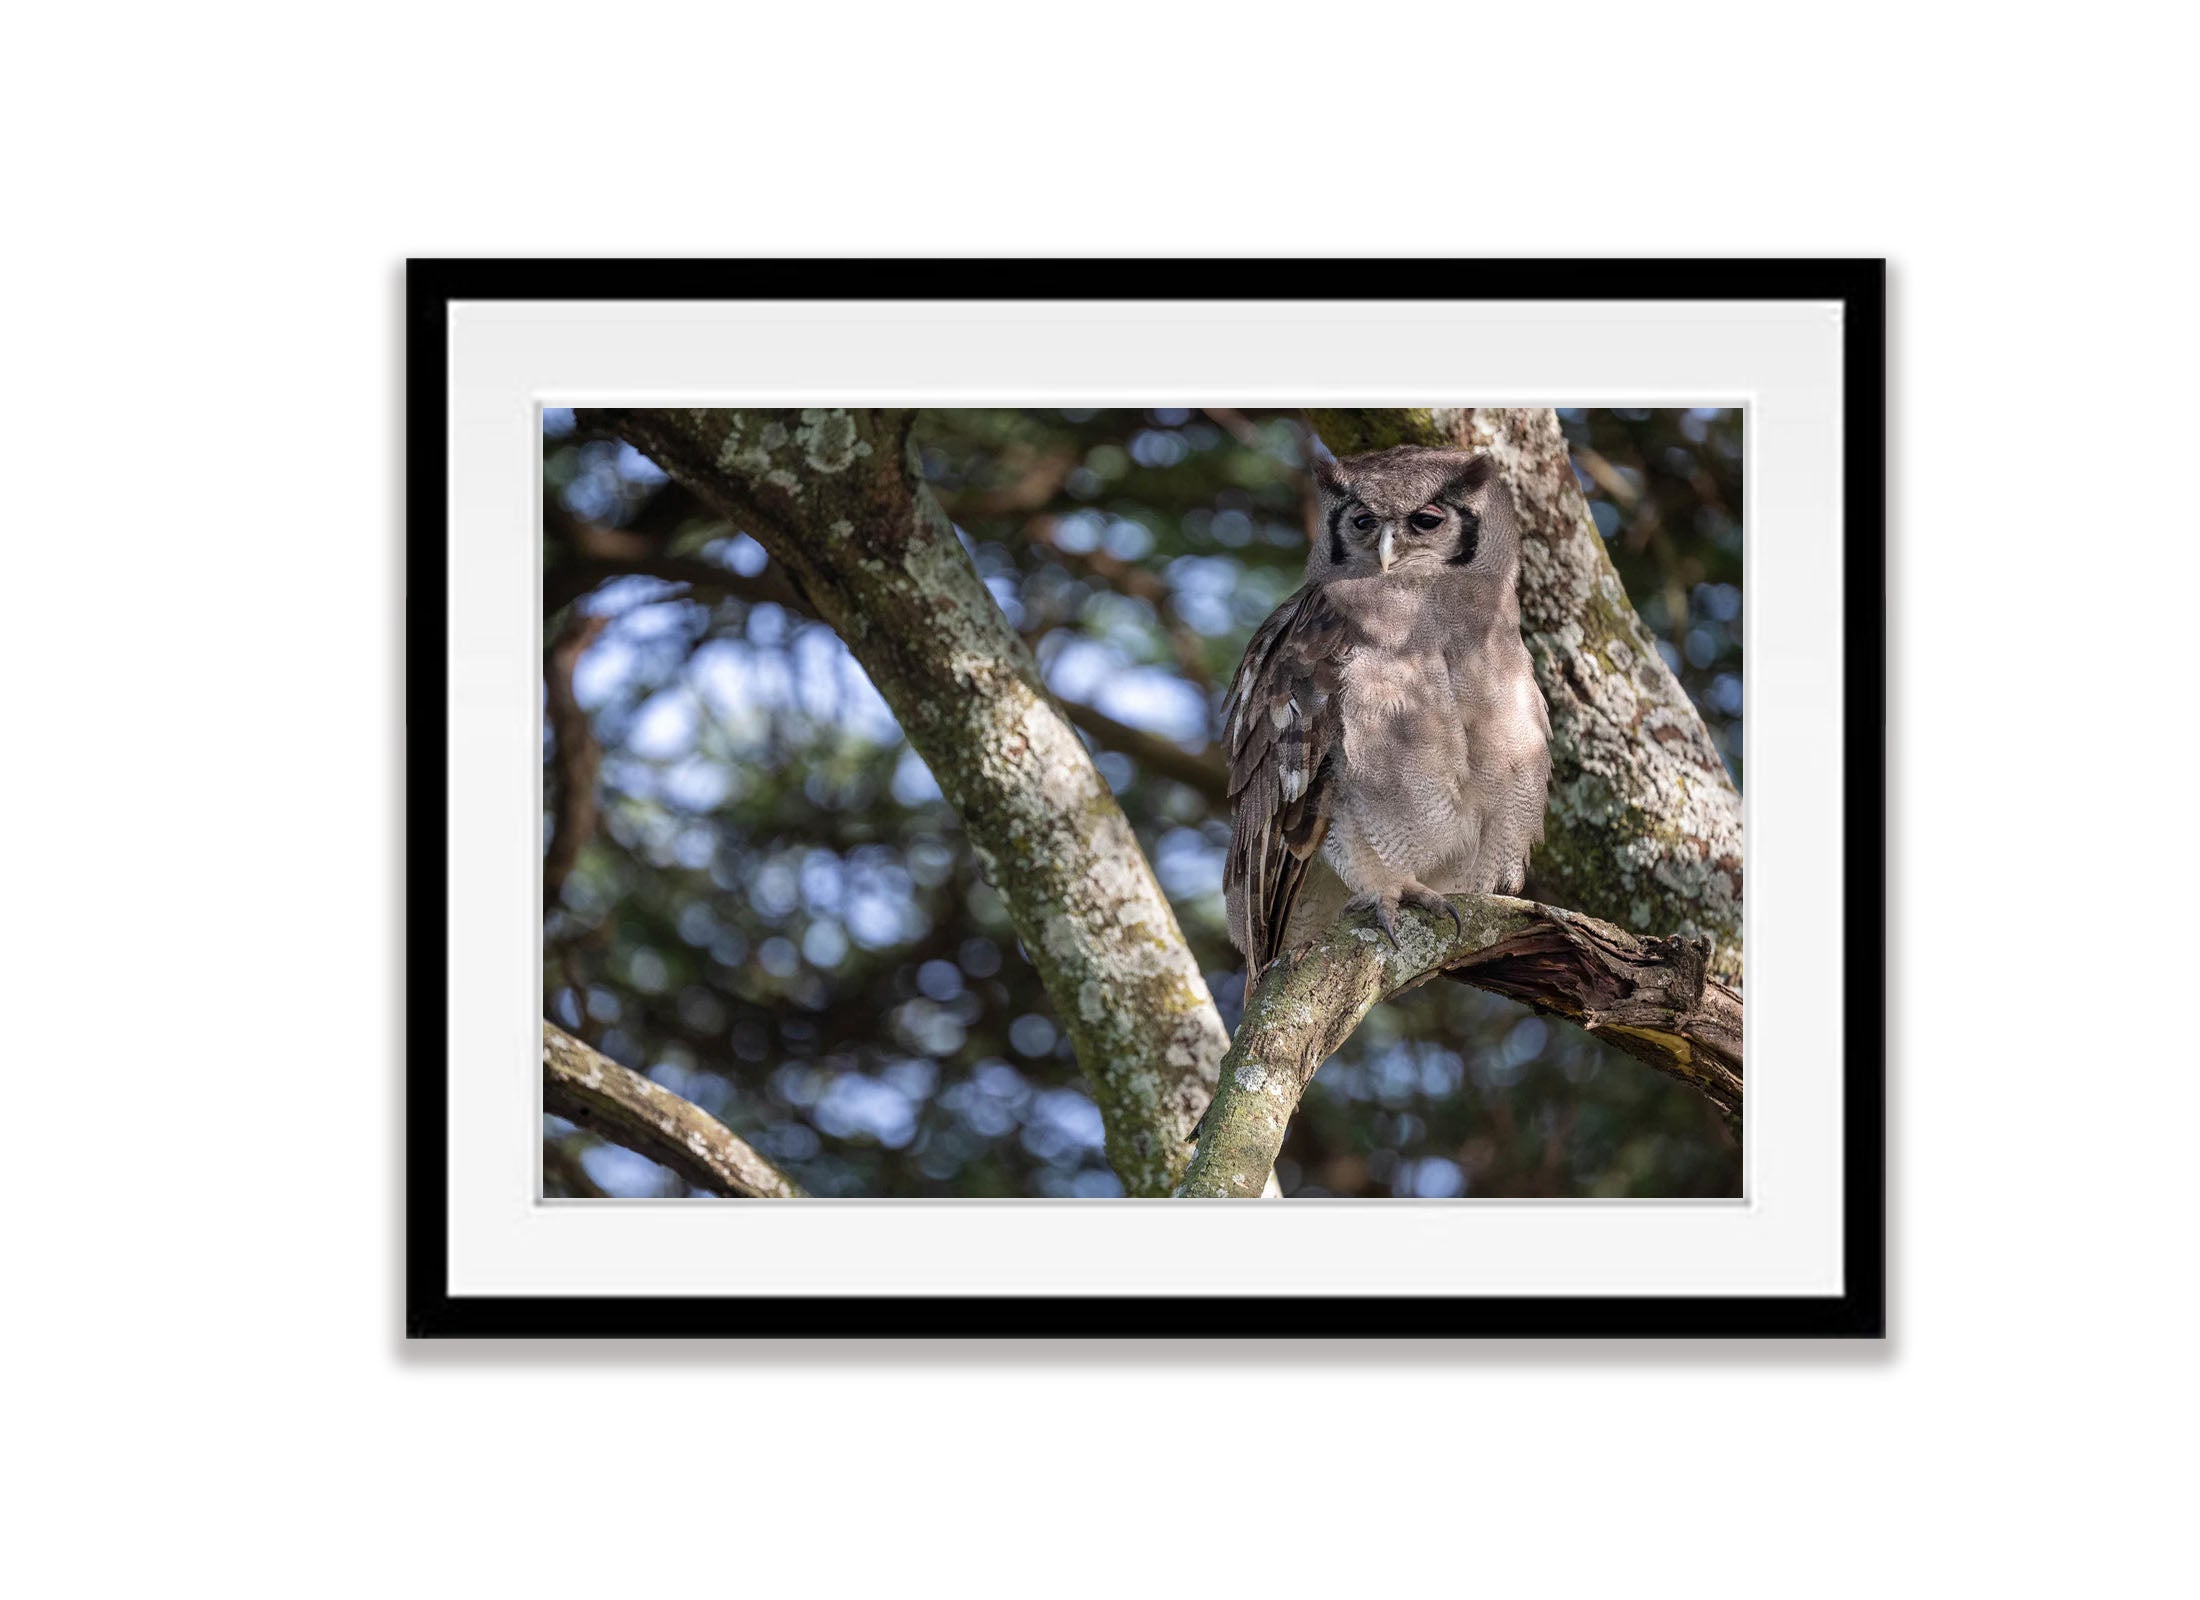 Verreaux's Eagle-Owl, Tanzania